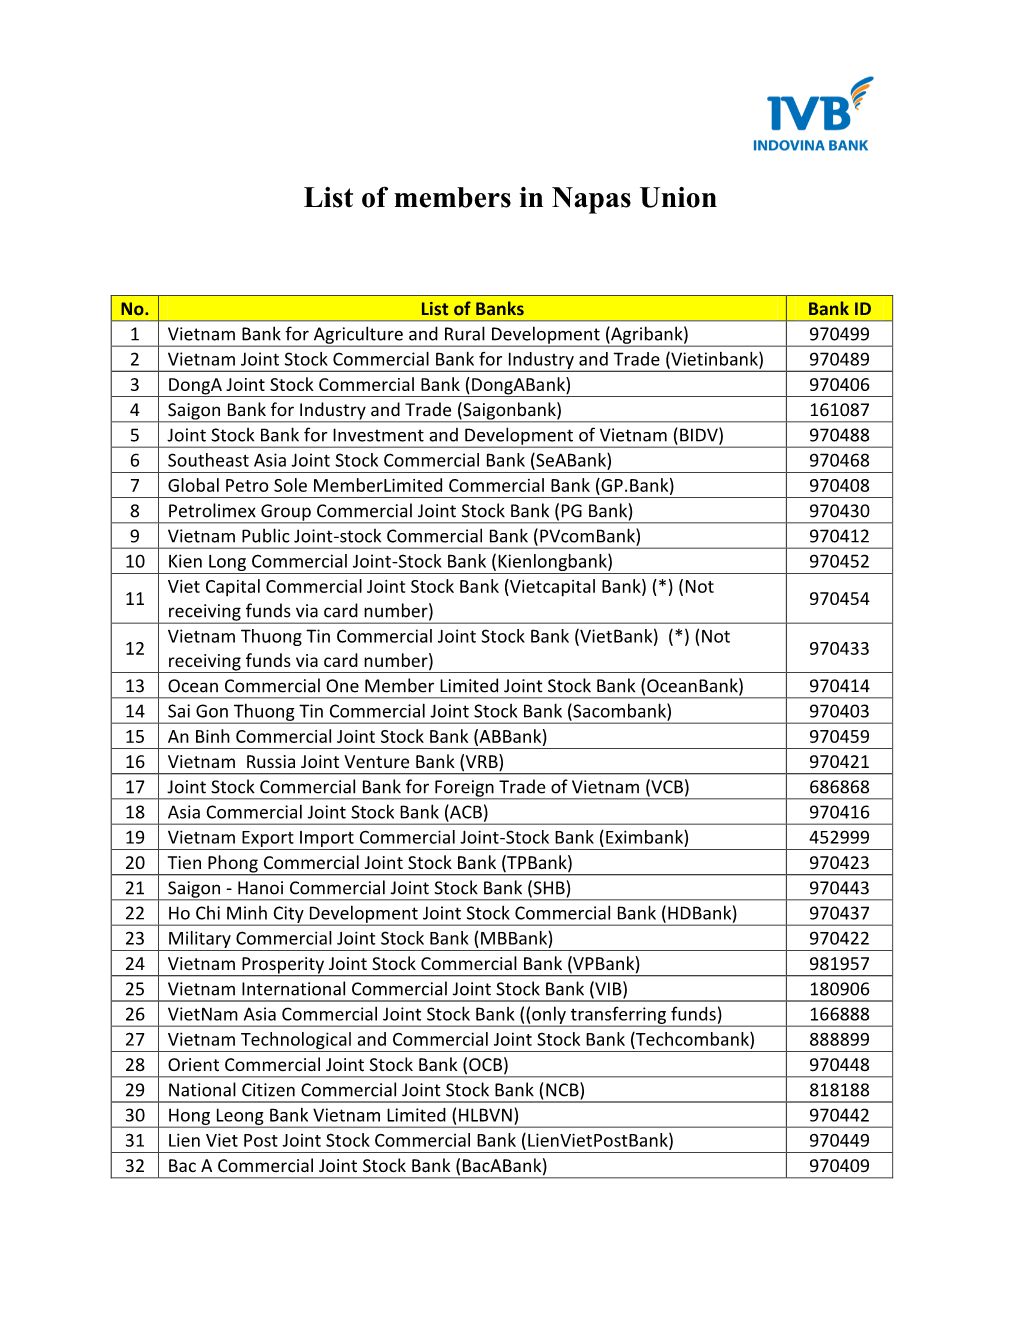 List of Members in Napas Union